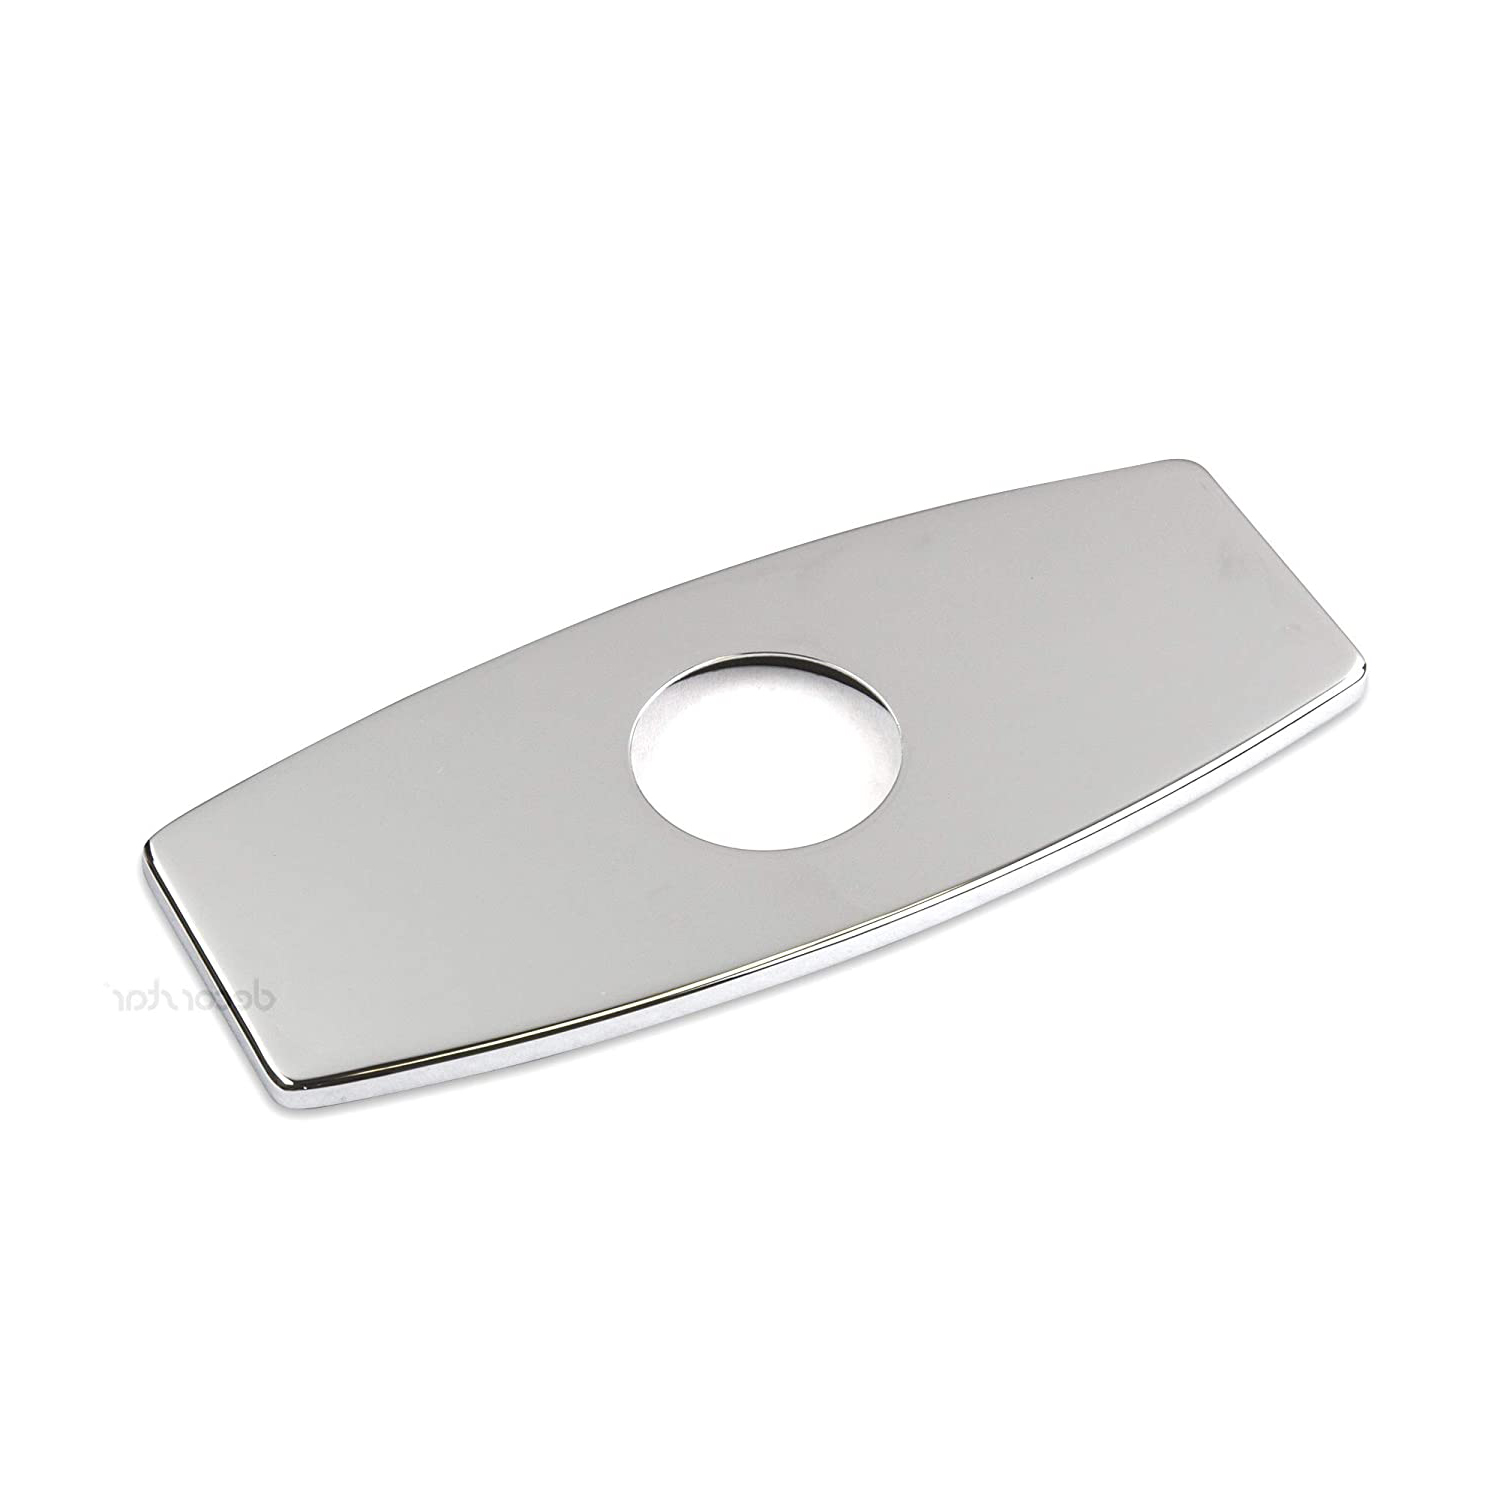 Wovier Faucet Plate Escutcheon, Holes Cover Deck Plate – W1-1